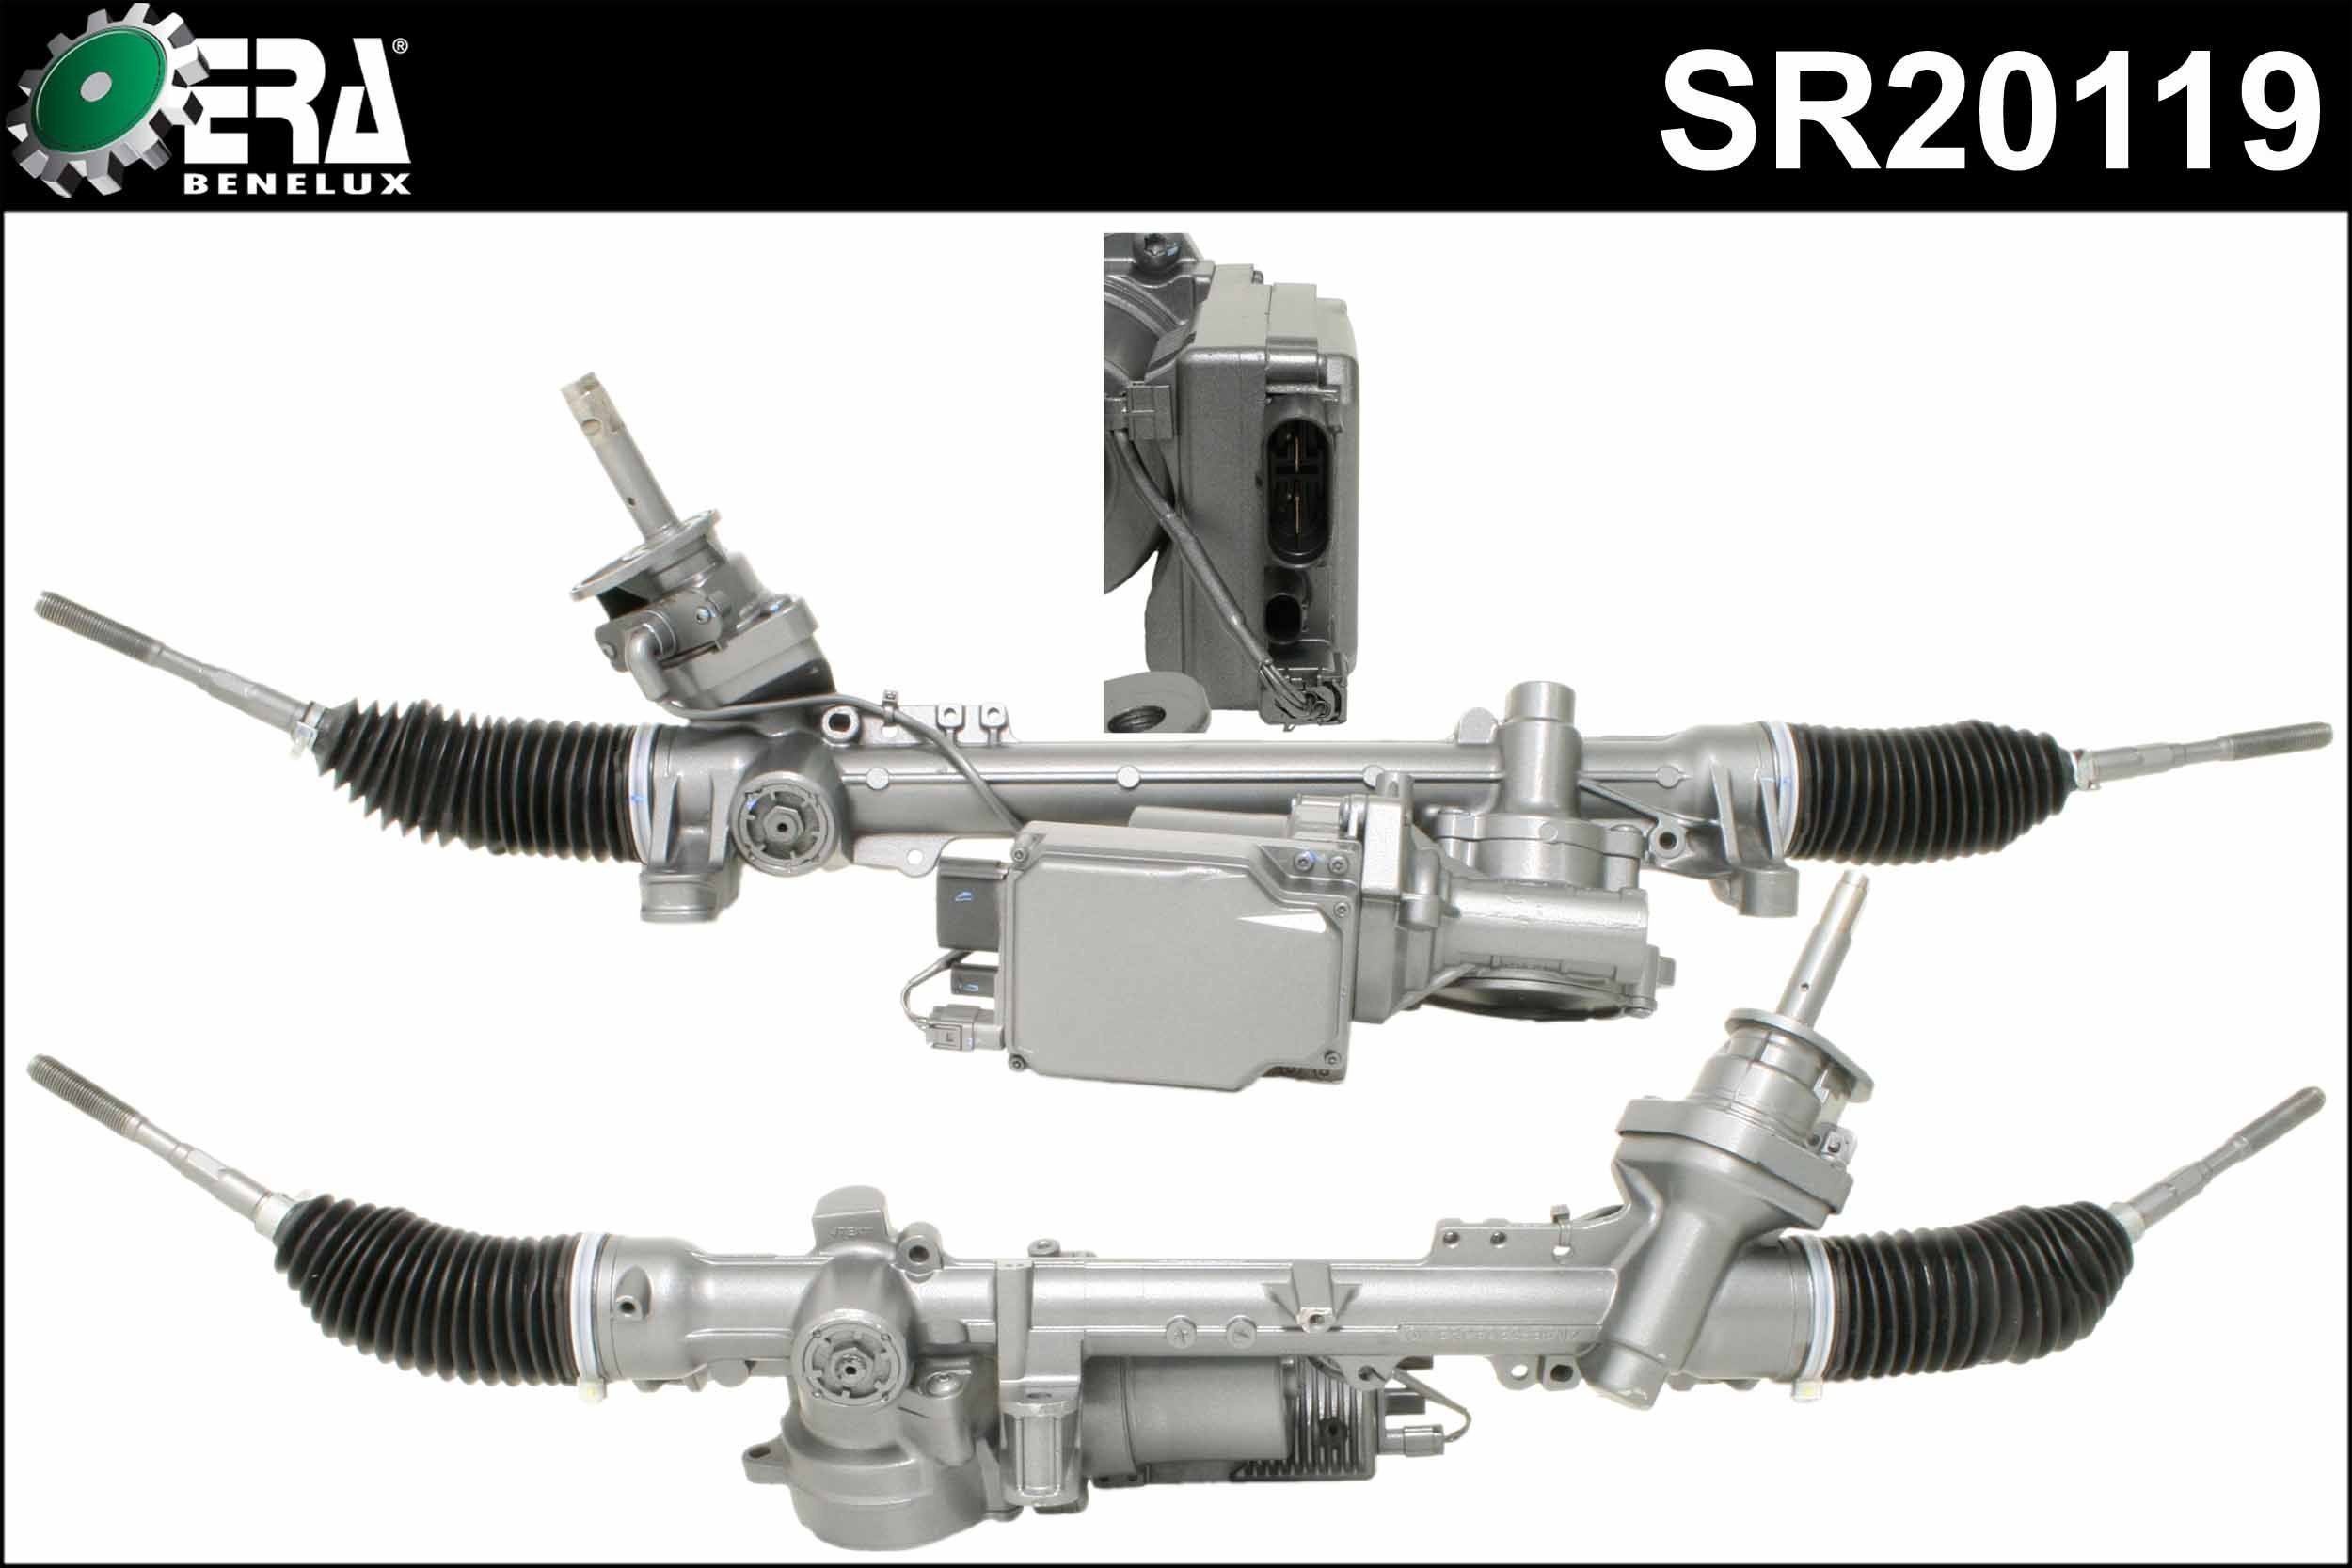 Mercedes M-Class Steering gear 18462010 ERA Benelux SR20119 online buy